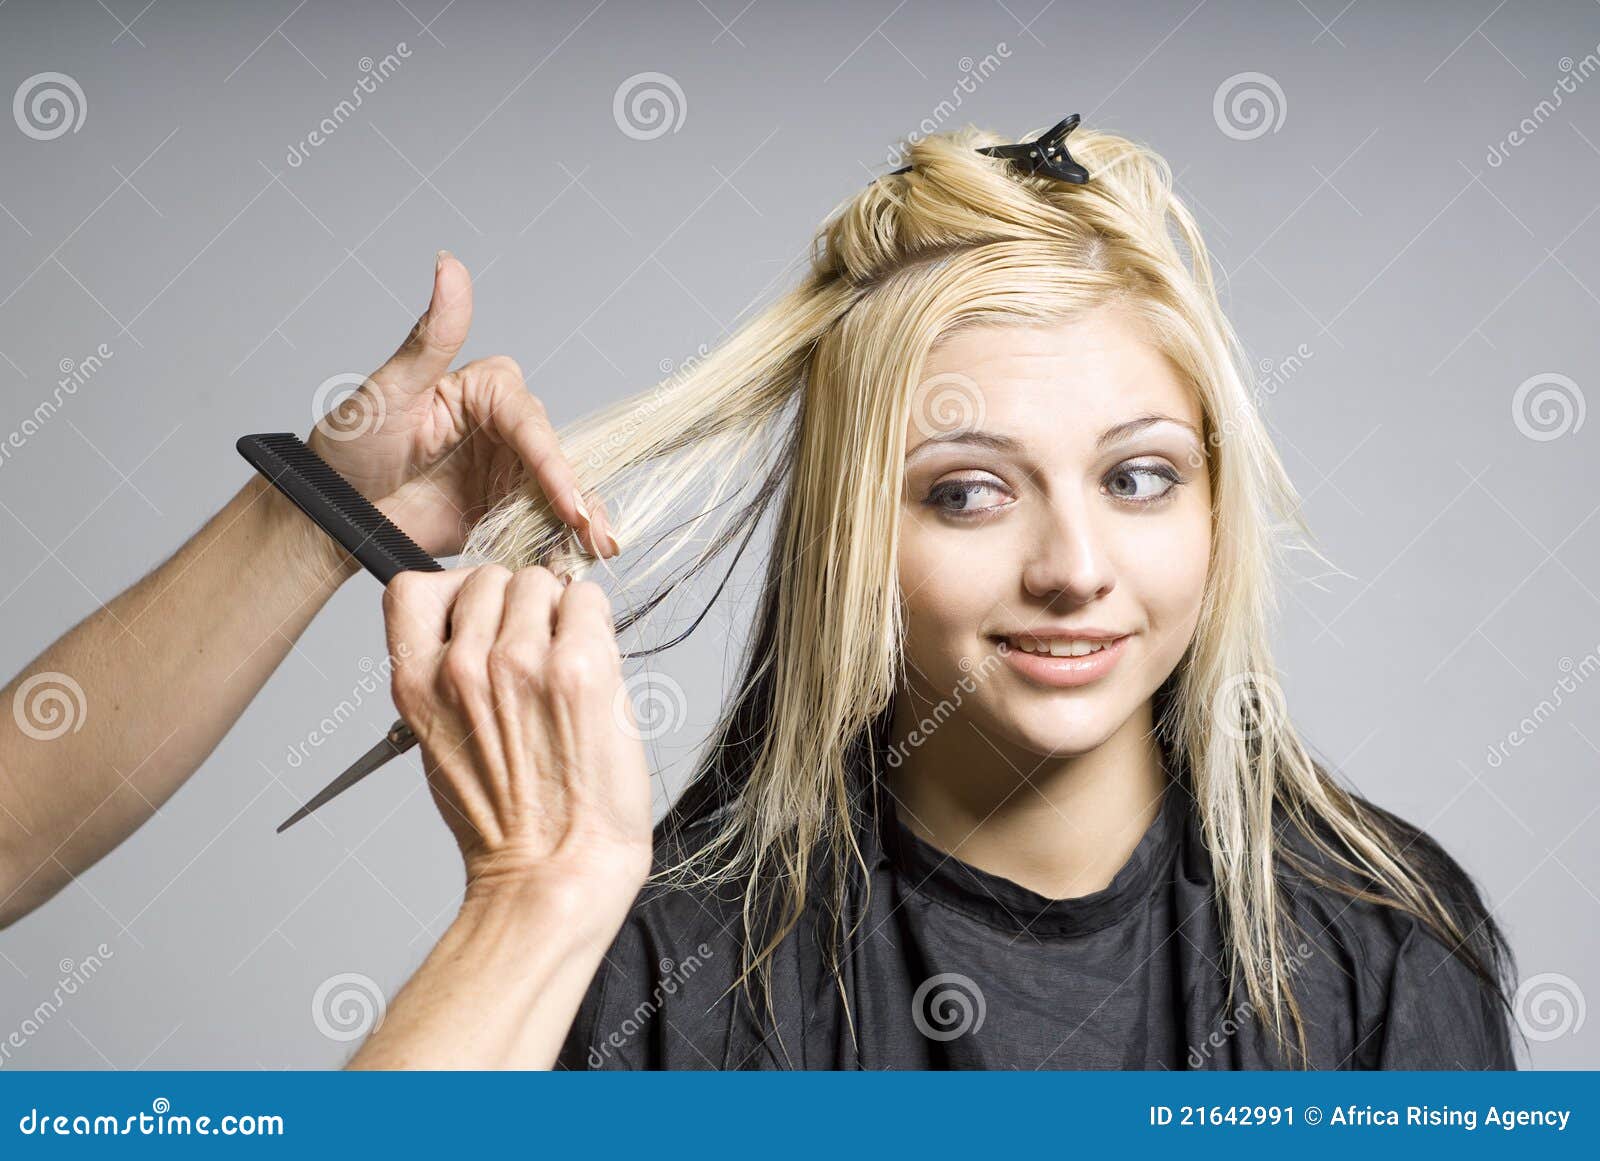 Hairdresser Cutting Hair Stock Image  Image: 21642991